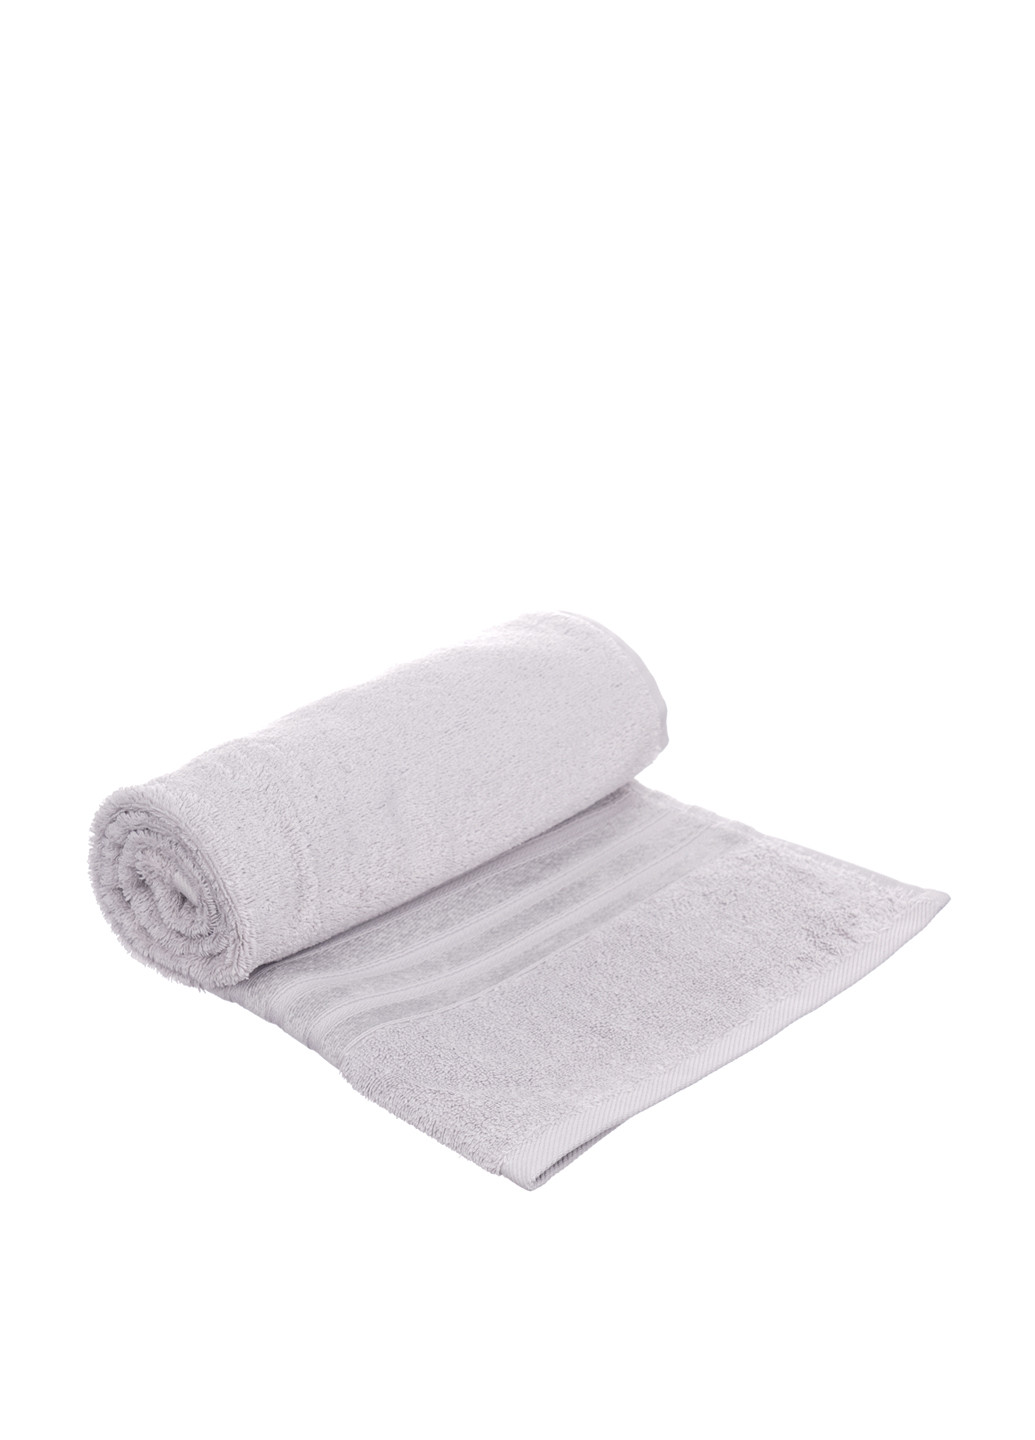 Tac полотенце, 50х90 см однотонный светло-серый производство - Турция